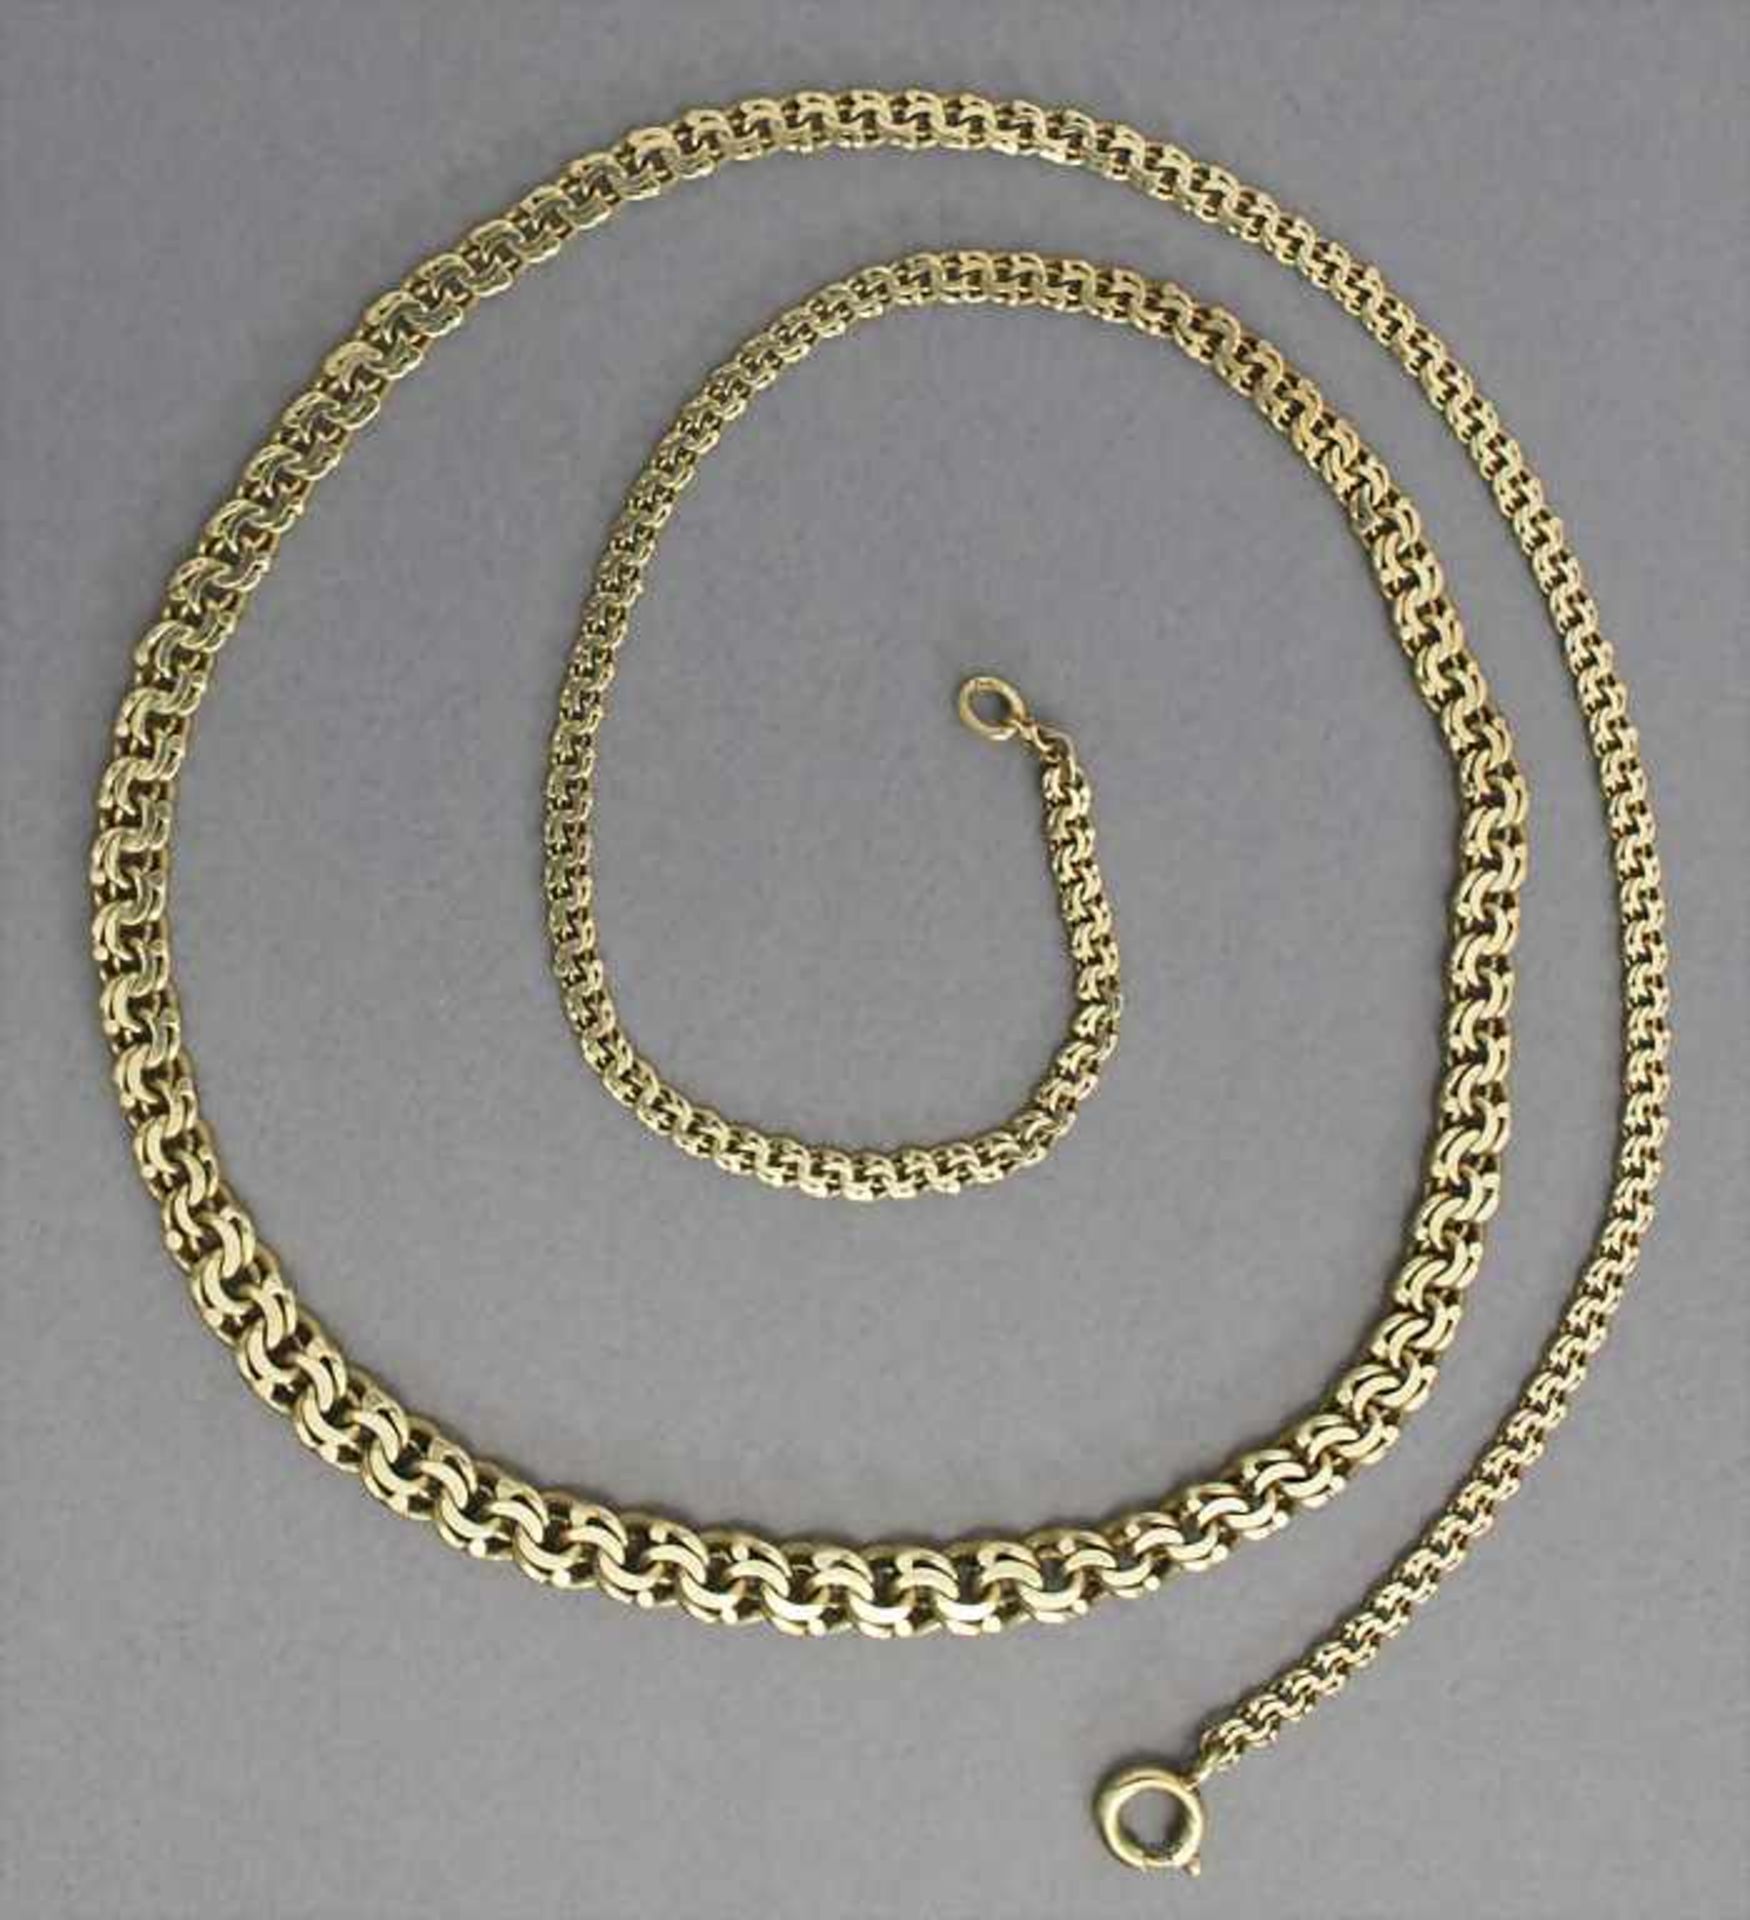 Halskette in Gold / A necklace in goldMaterial: Gelbgold Au 585/000 14 Kt, gepunzt,Länge: 46 cm,